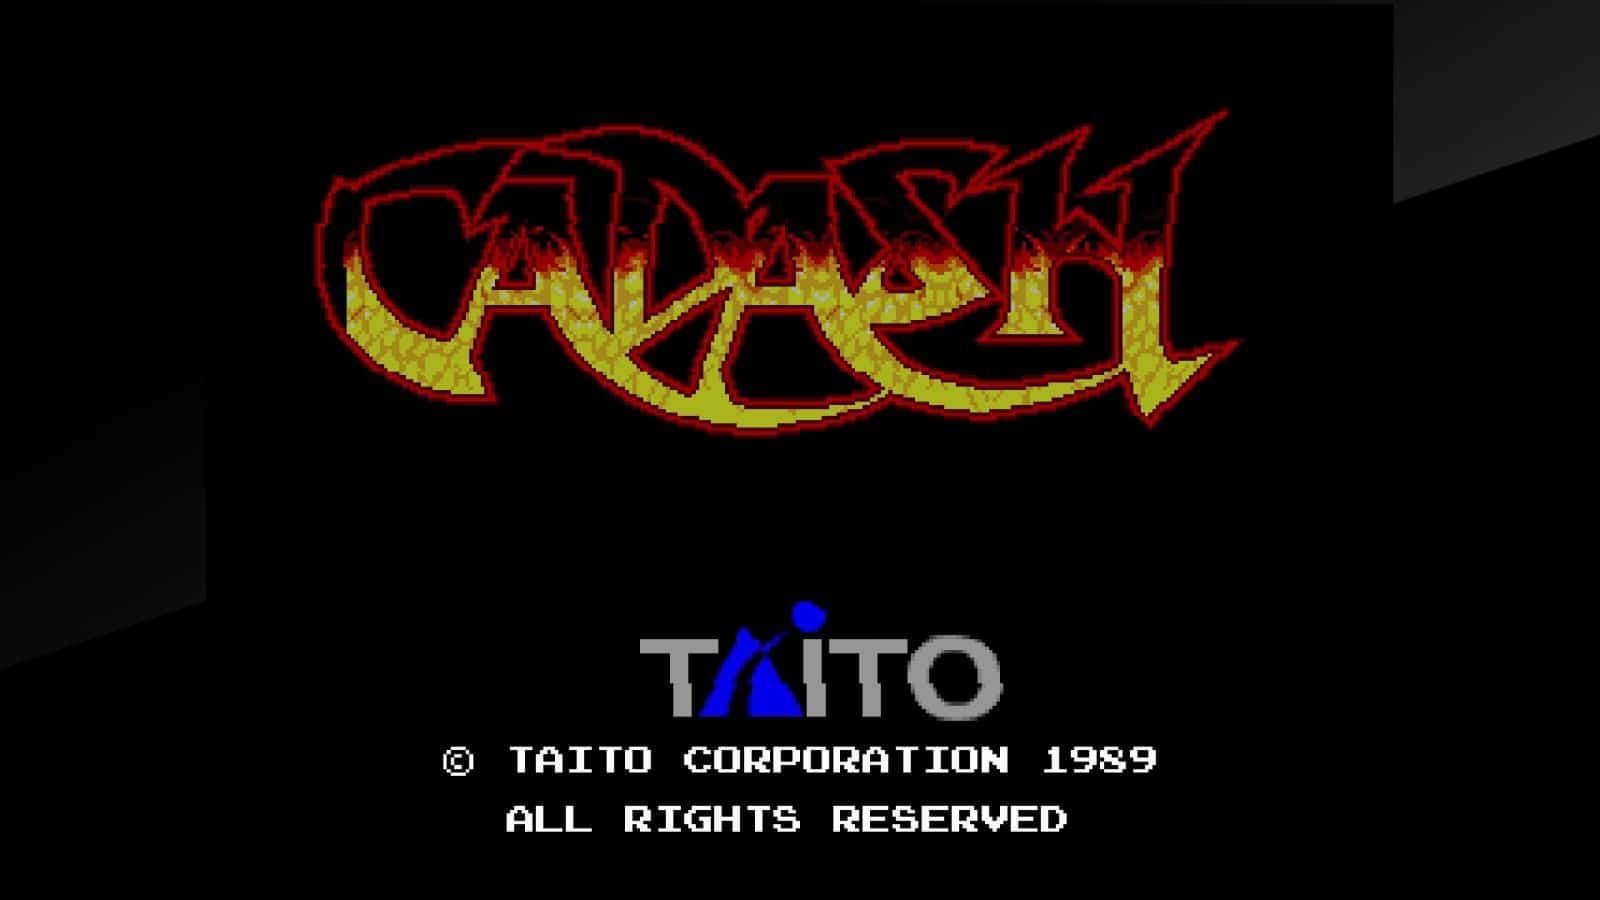 Cadash (1989)